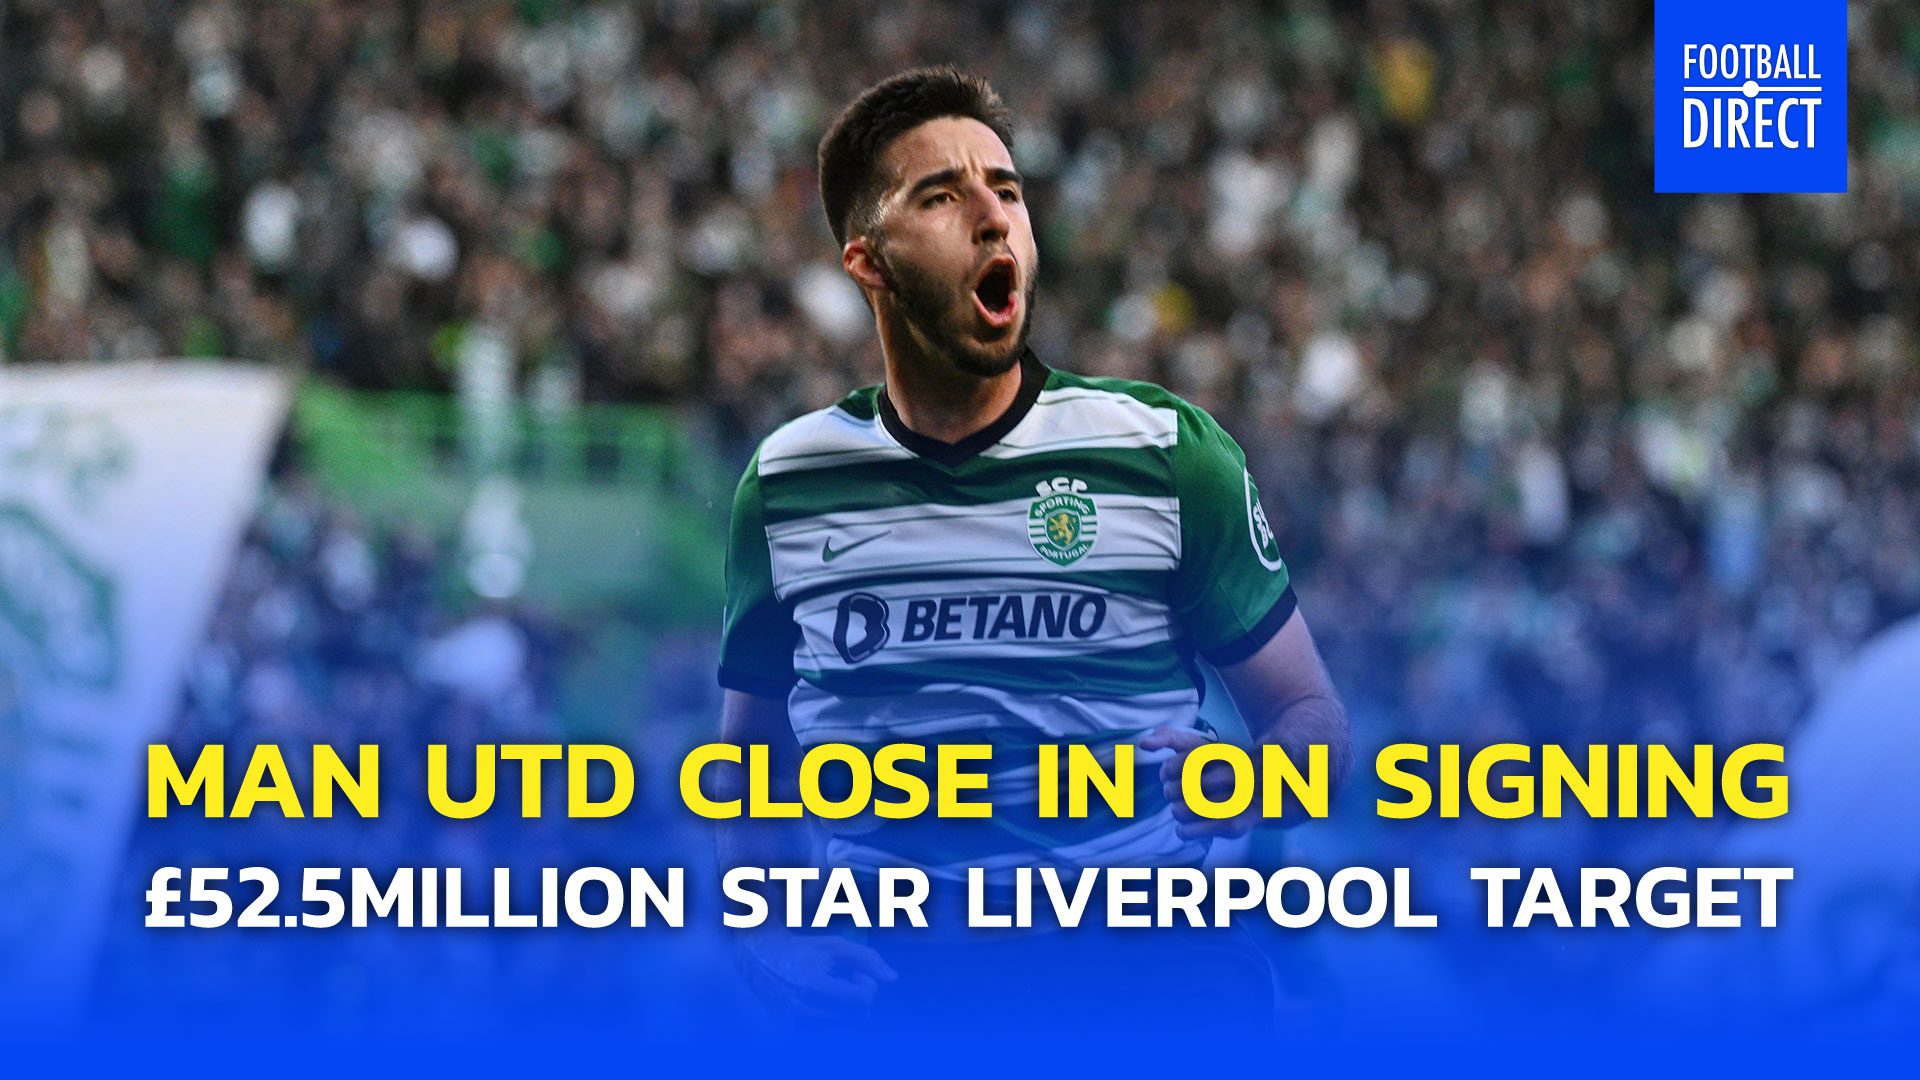 Man Utd close in on signing £52.5million star Liverpool target